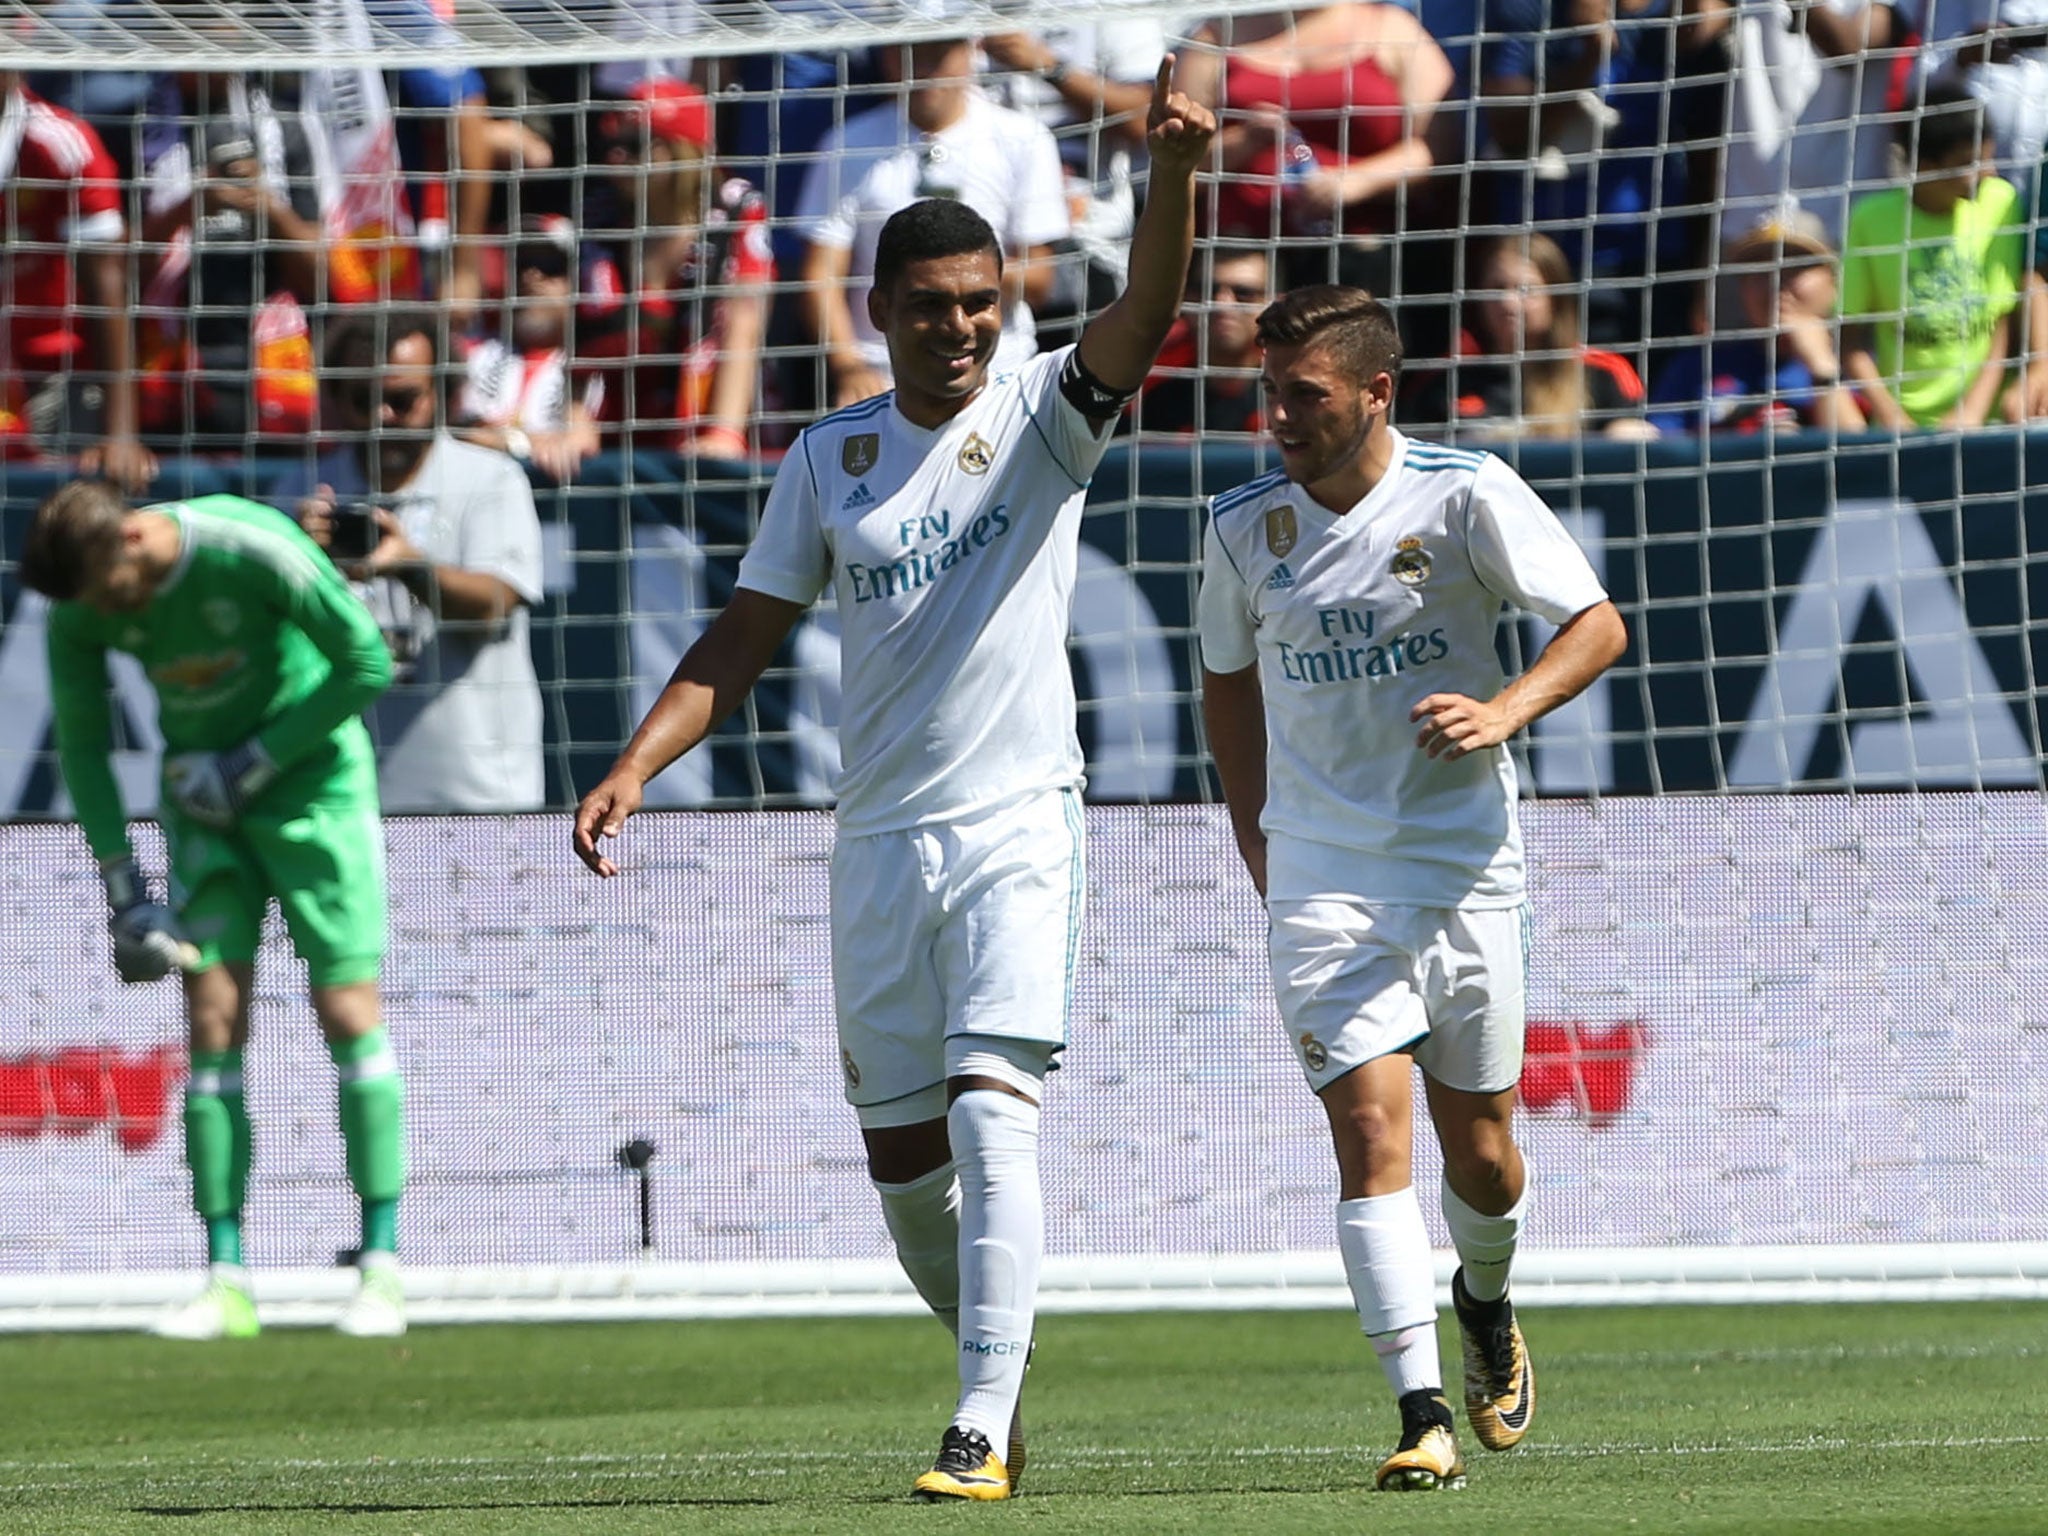 Real Madrid were beaten by United on penalties in their last pre-season fixture